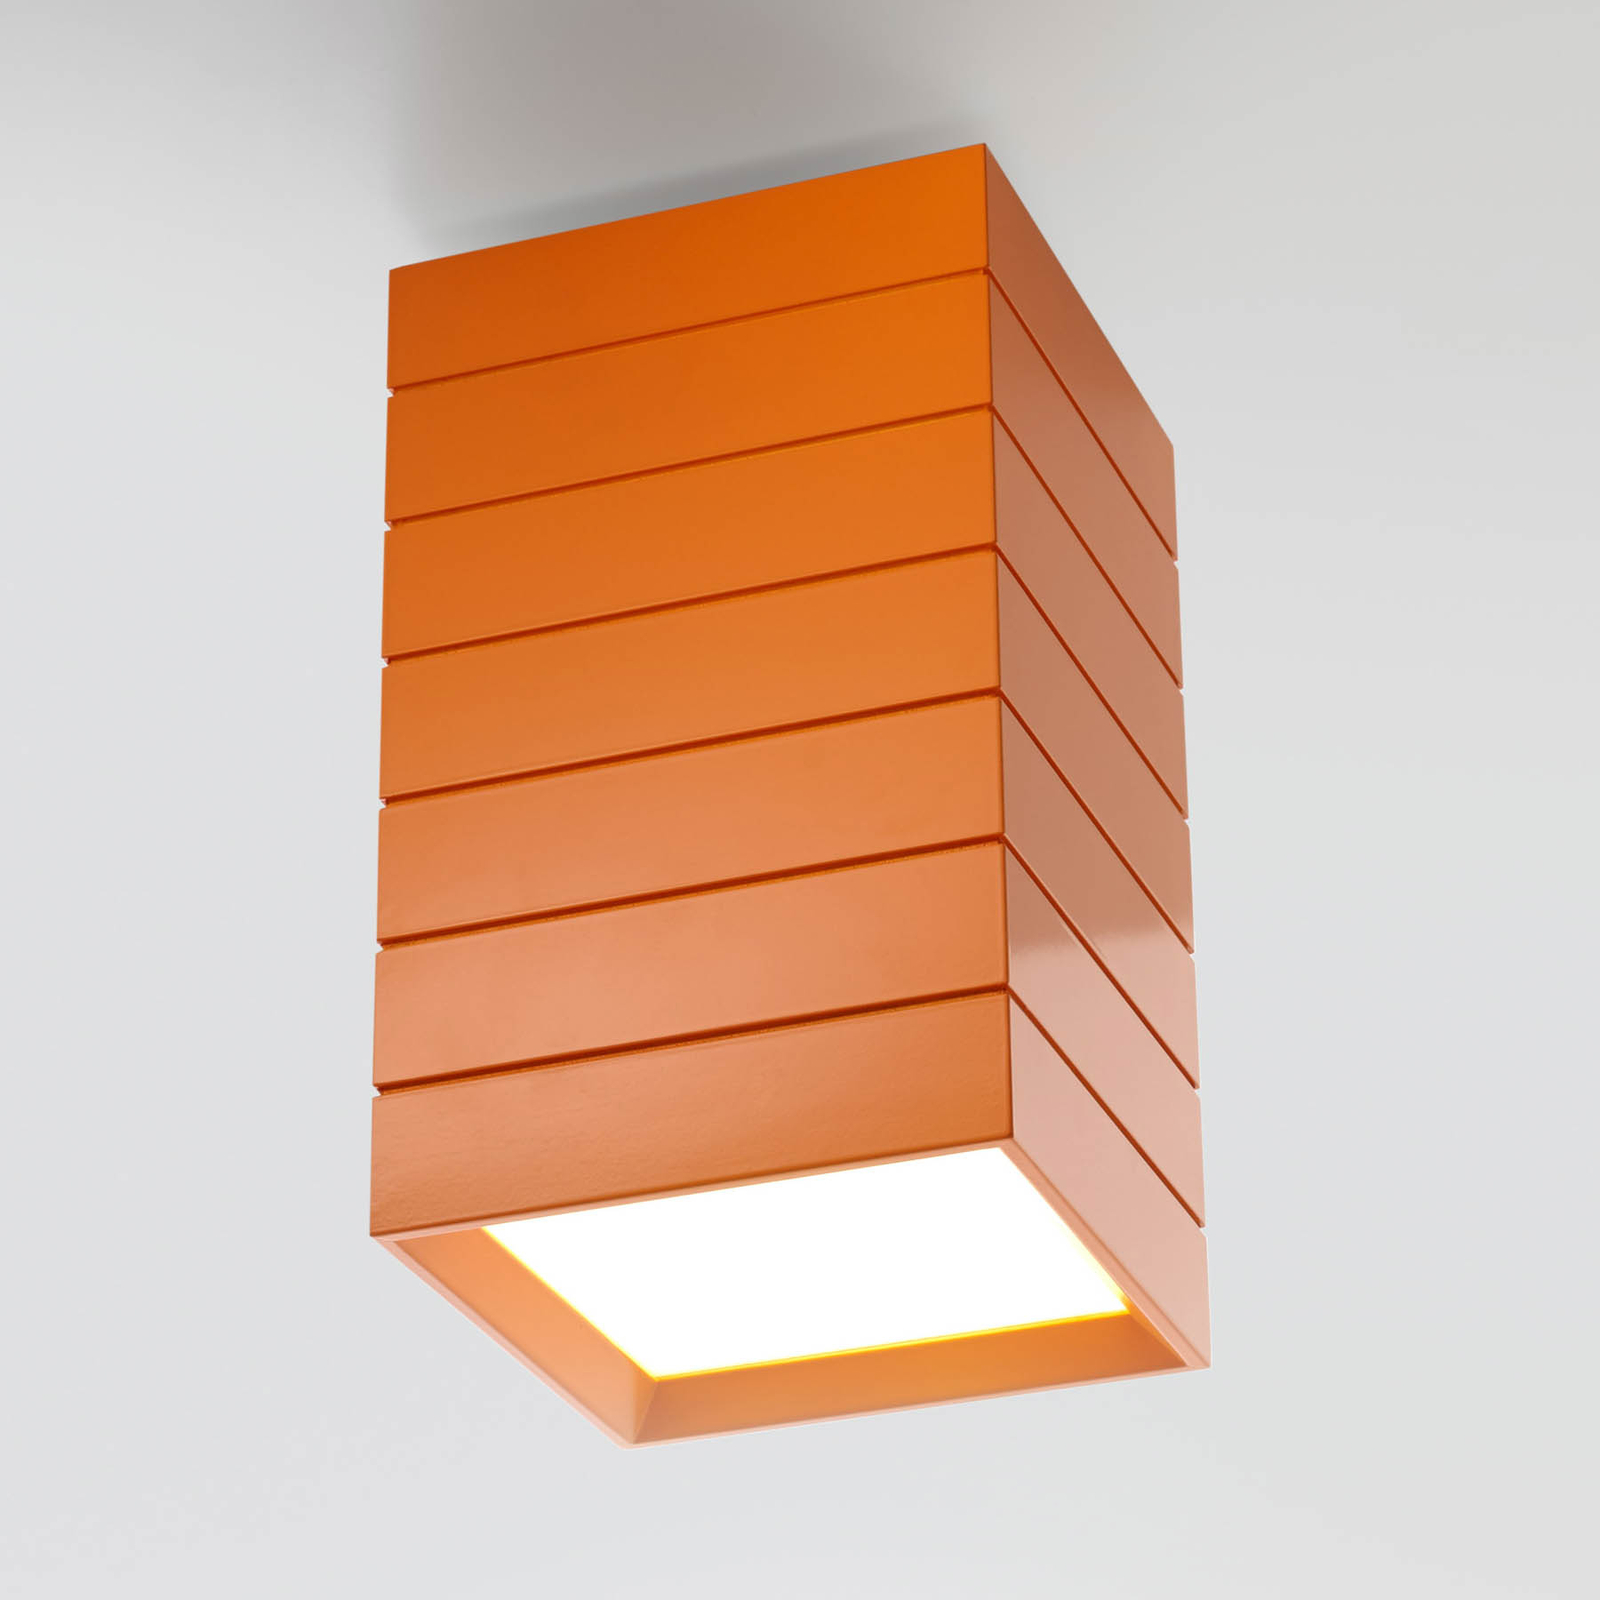 Artemide Groupage LED-Deckenlampe 20x20cm orange